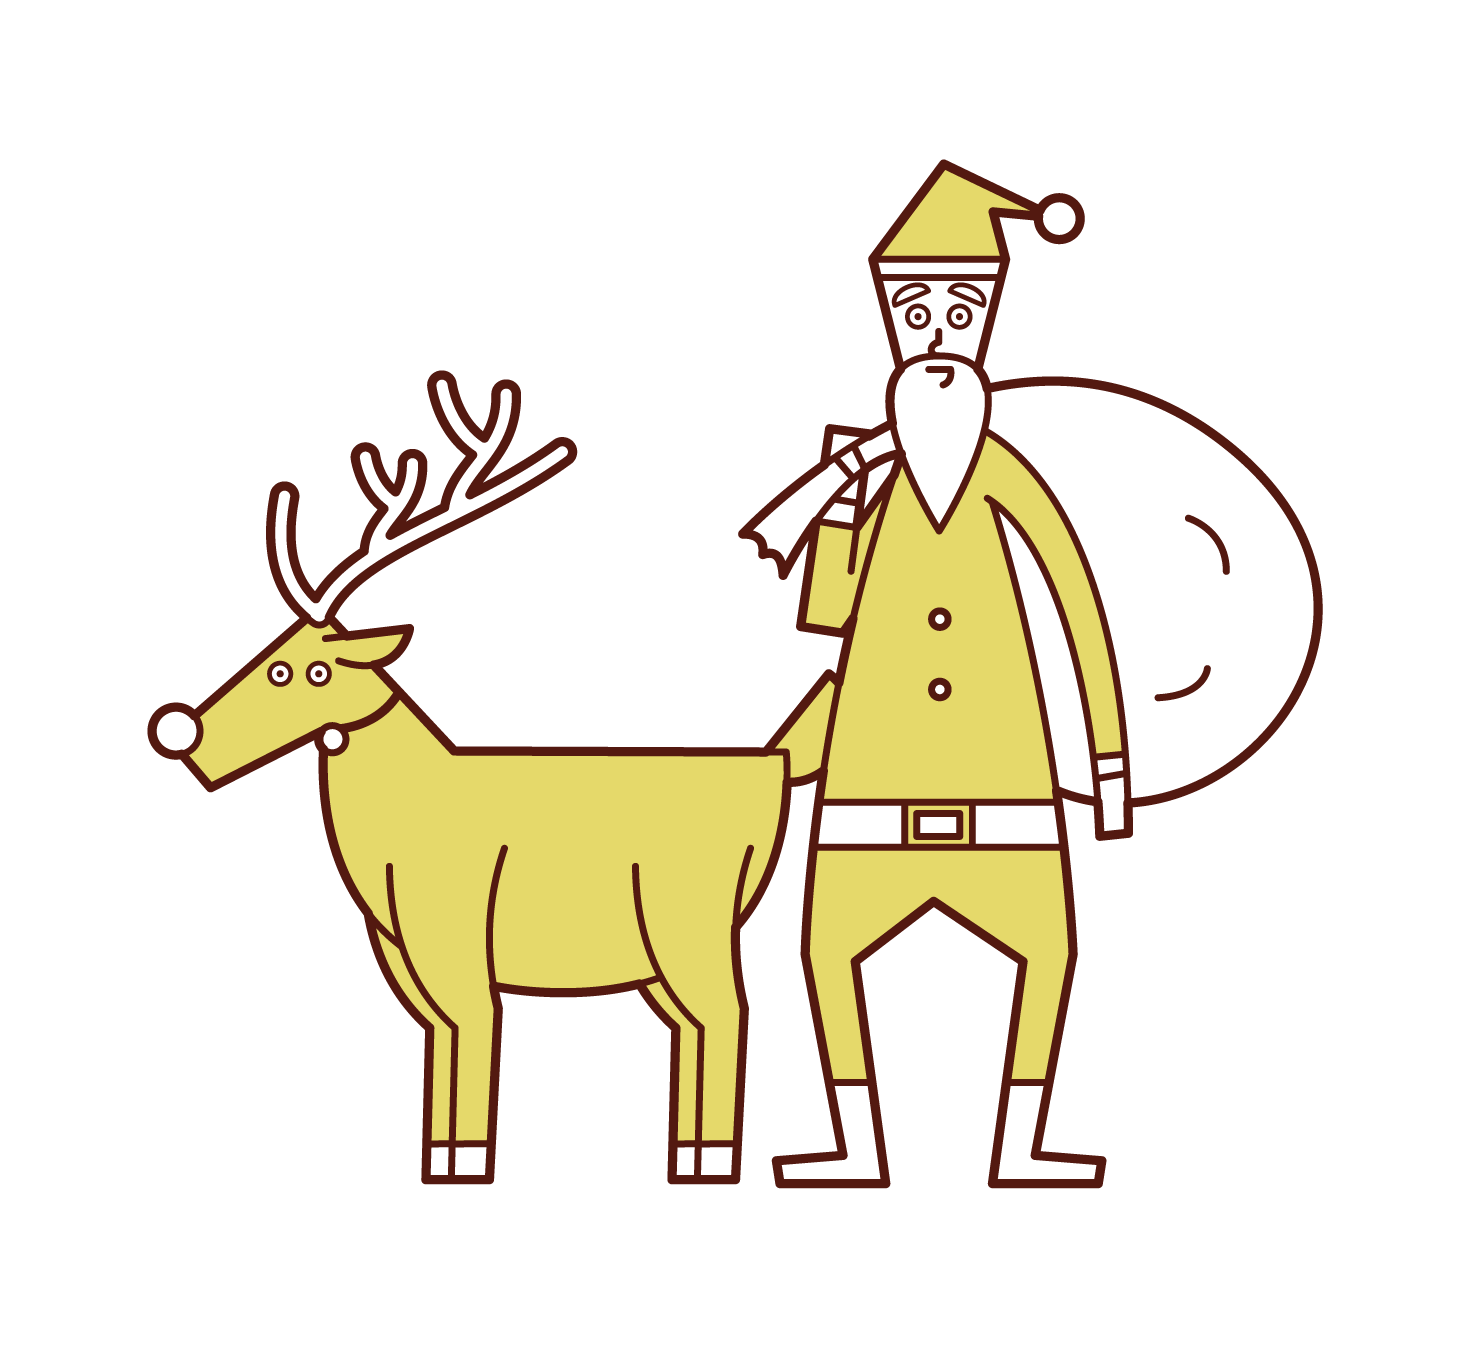 Reindeer and Santa Claus Illustrations